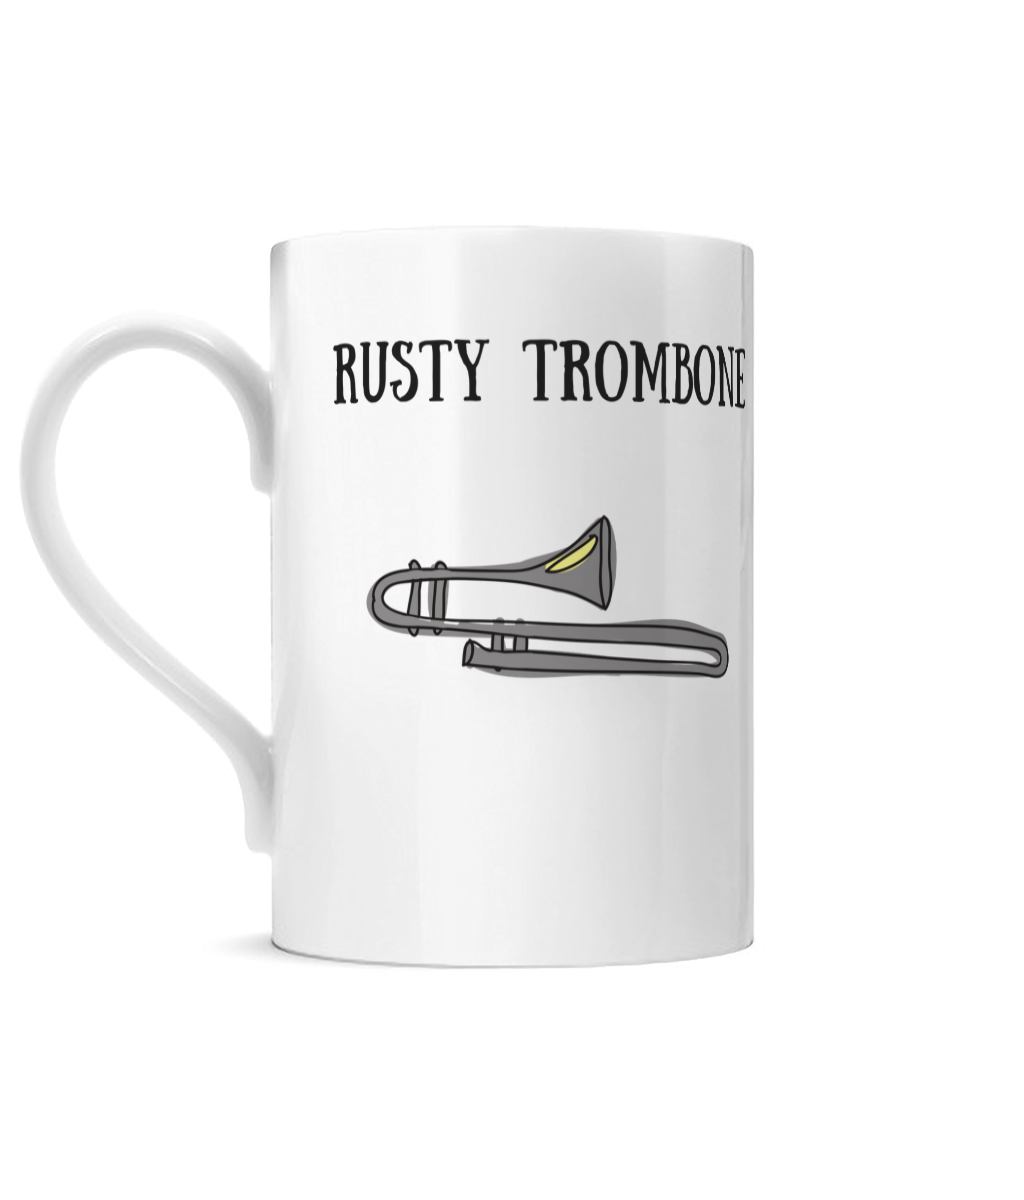 Rusty Trombone Posh Mug.